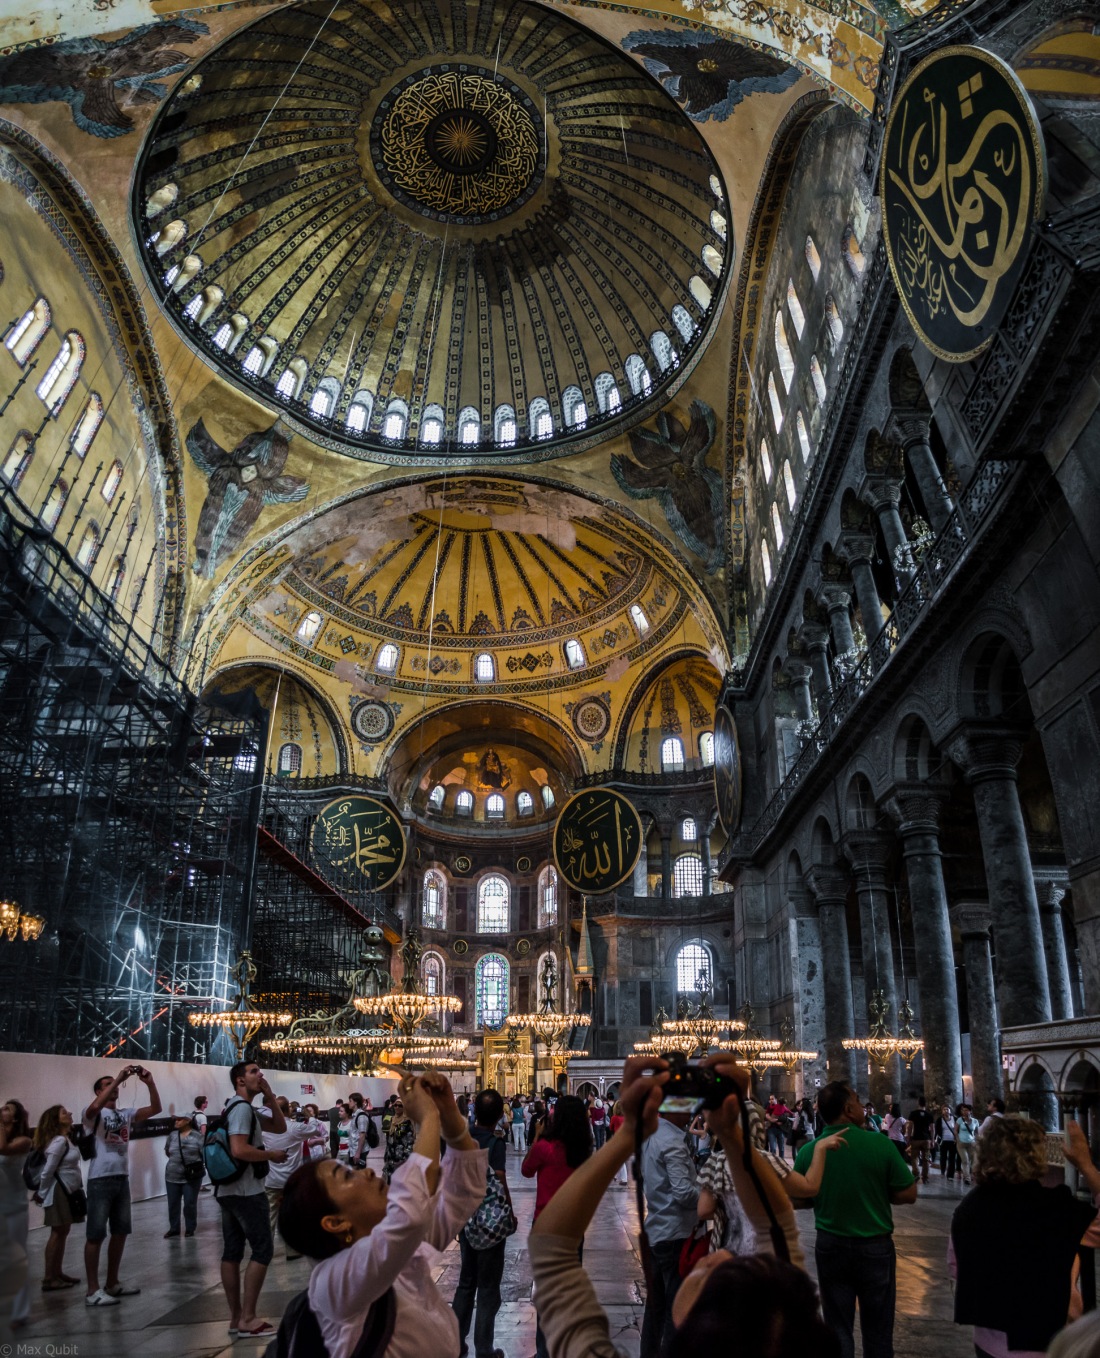 The ceiling of the Hagia Sophia